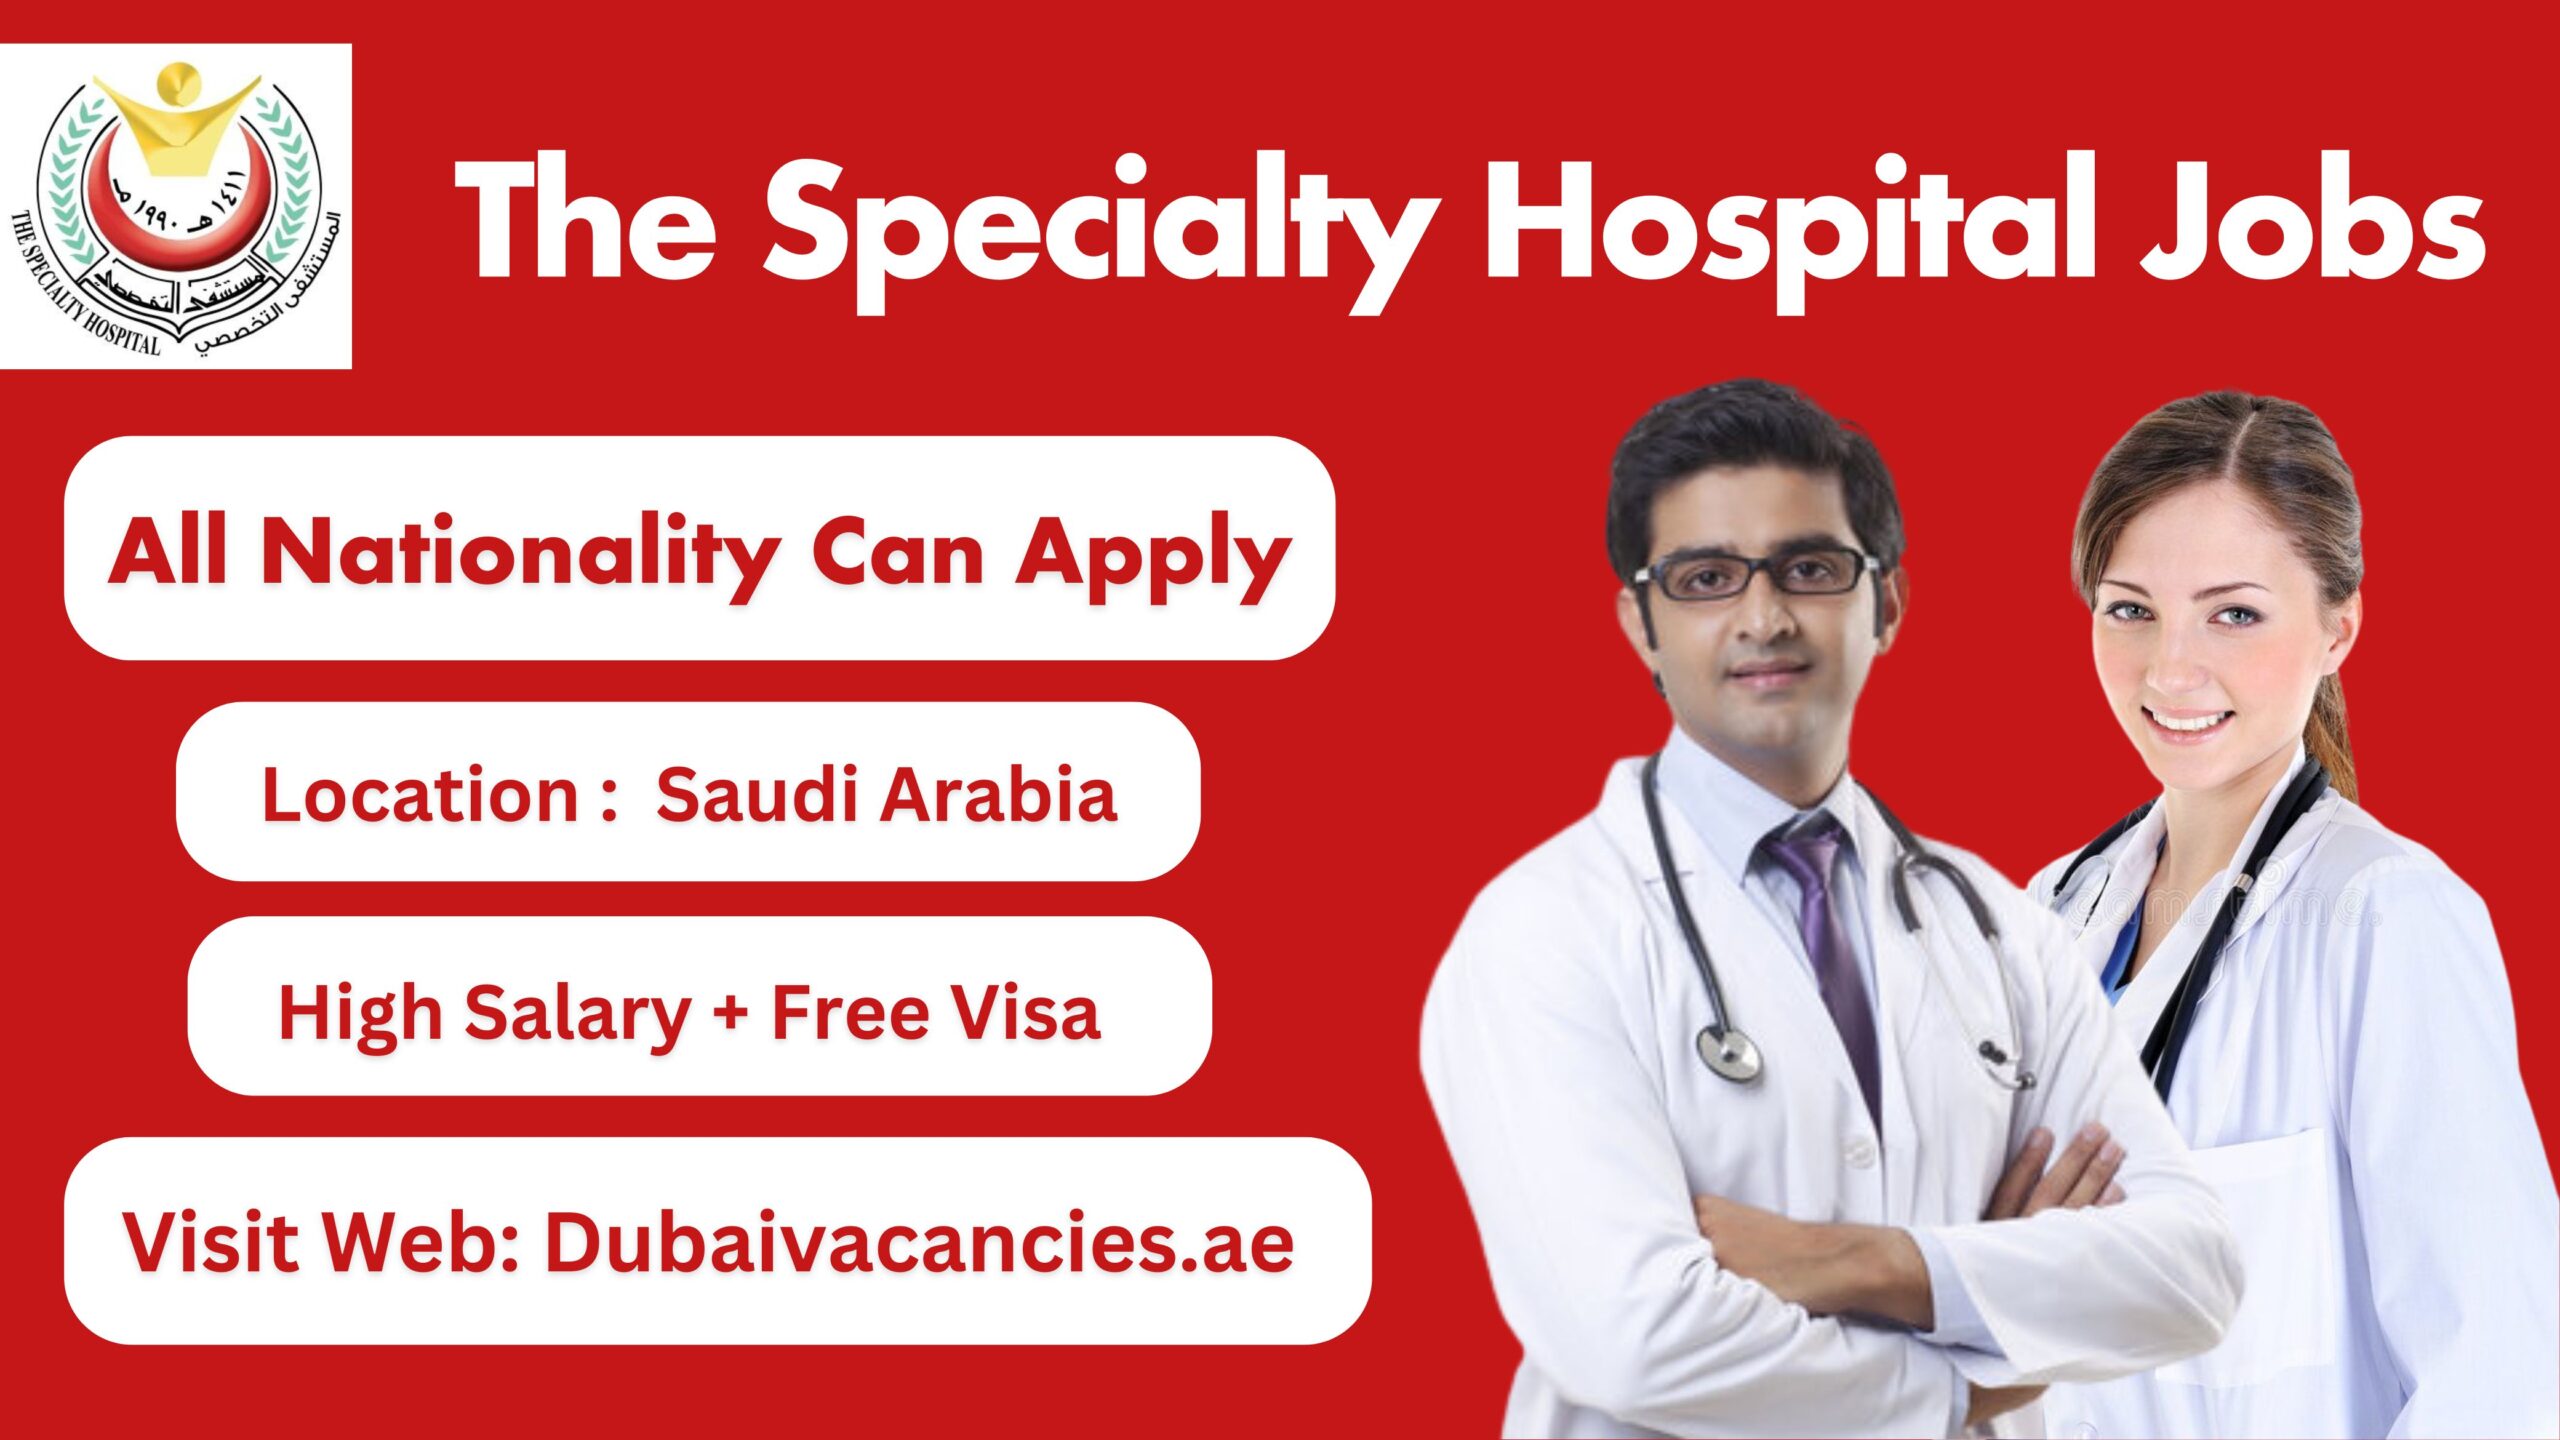 The Specialty Hospital Jobs